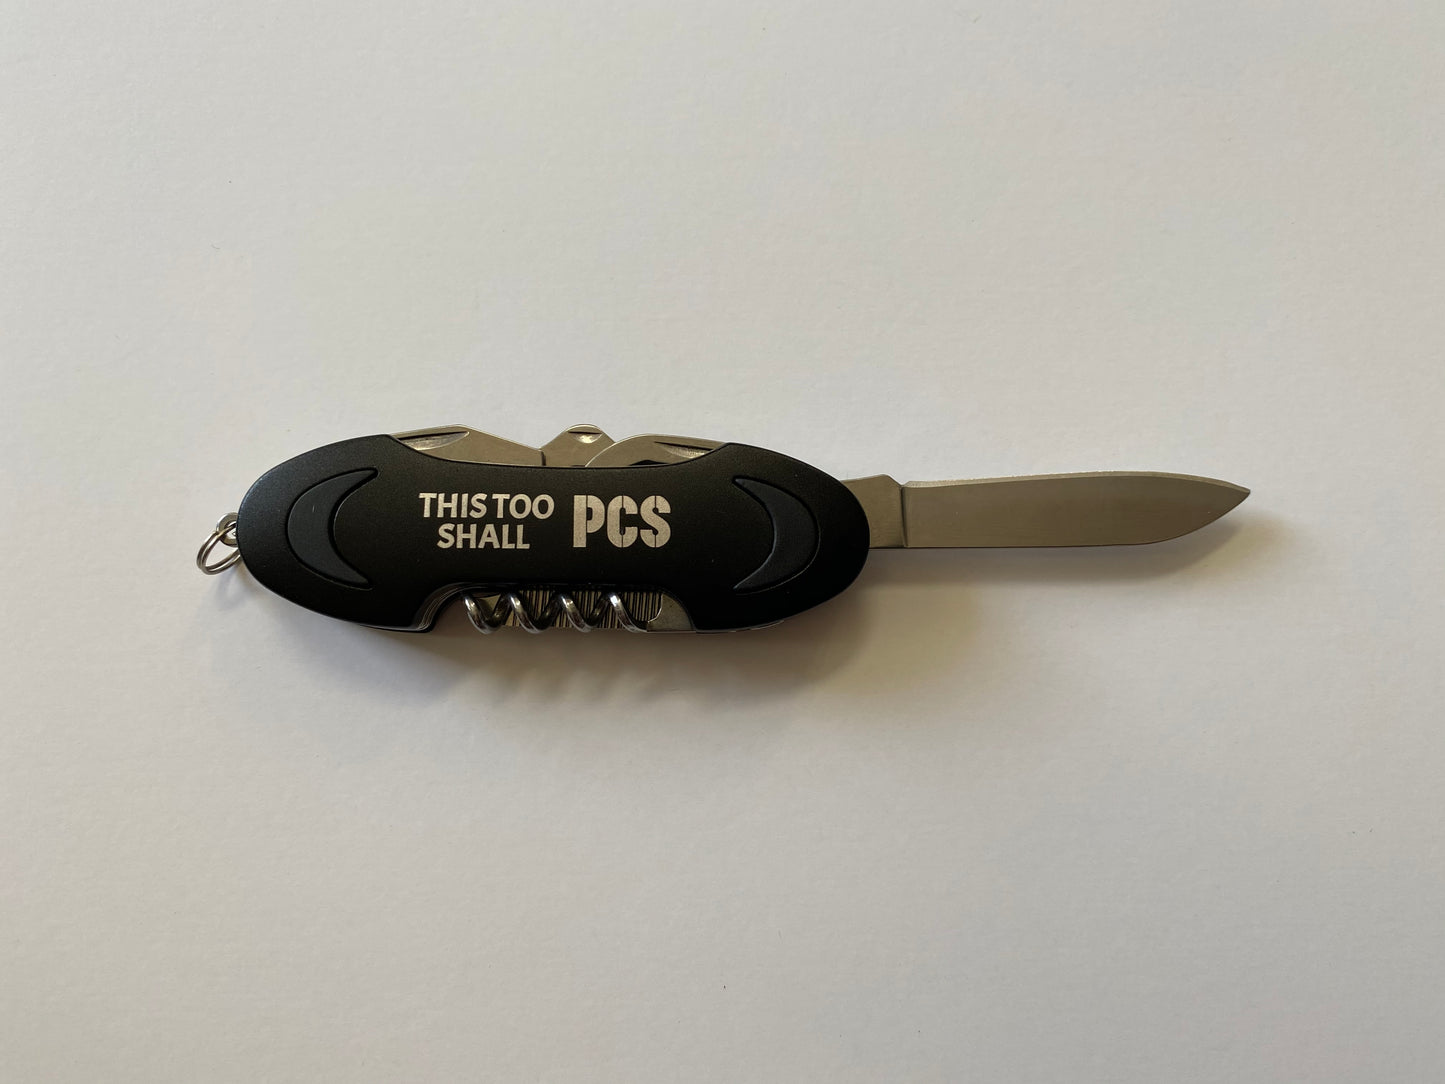 "This Too Shall PCS" Multi-Purpose Pocket Knife